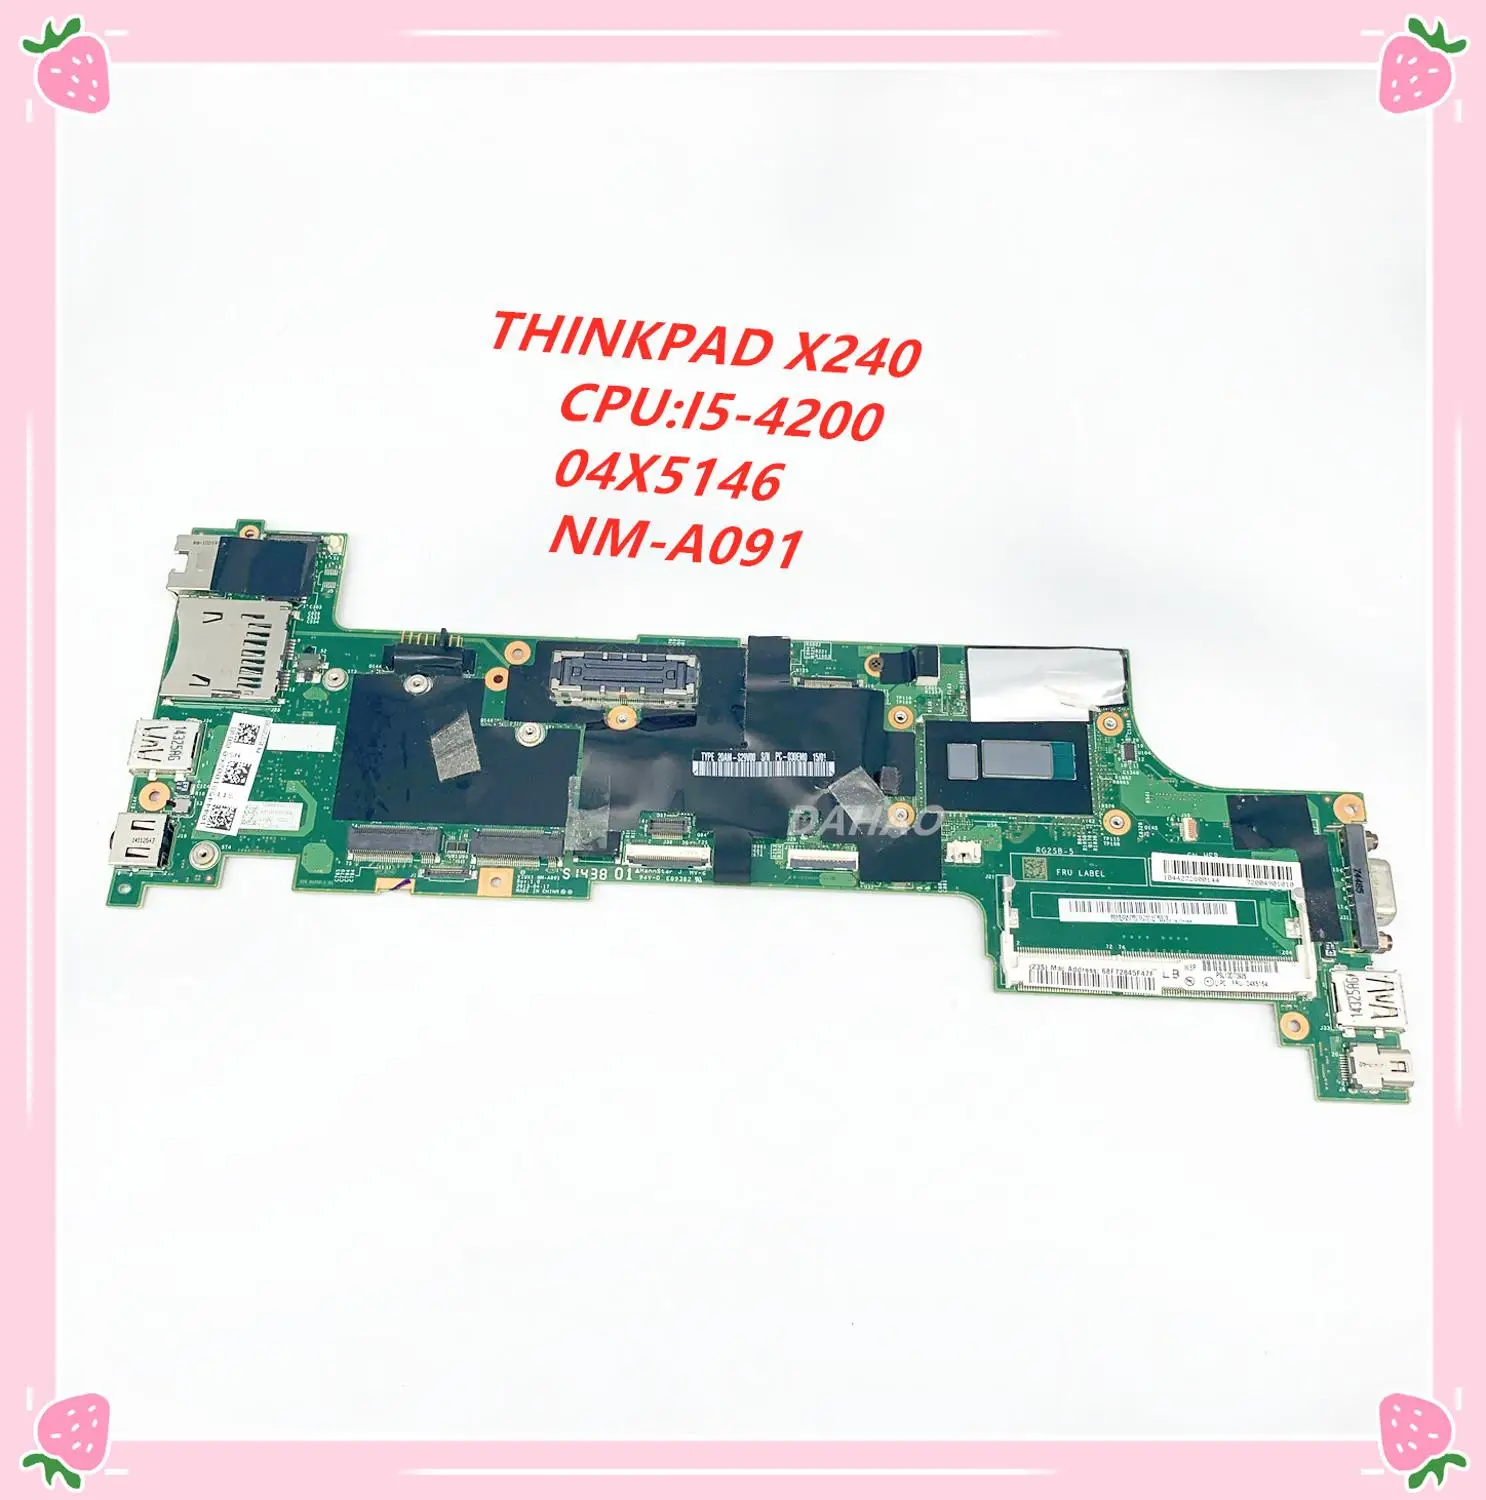 Lenovo Thinkpad X240 notebook Laptop motherboard CPU i5 4200U 100% test work FRU 04X5170 04X5146 04X5147 04X5158 5159